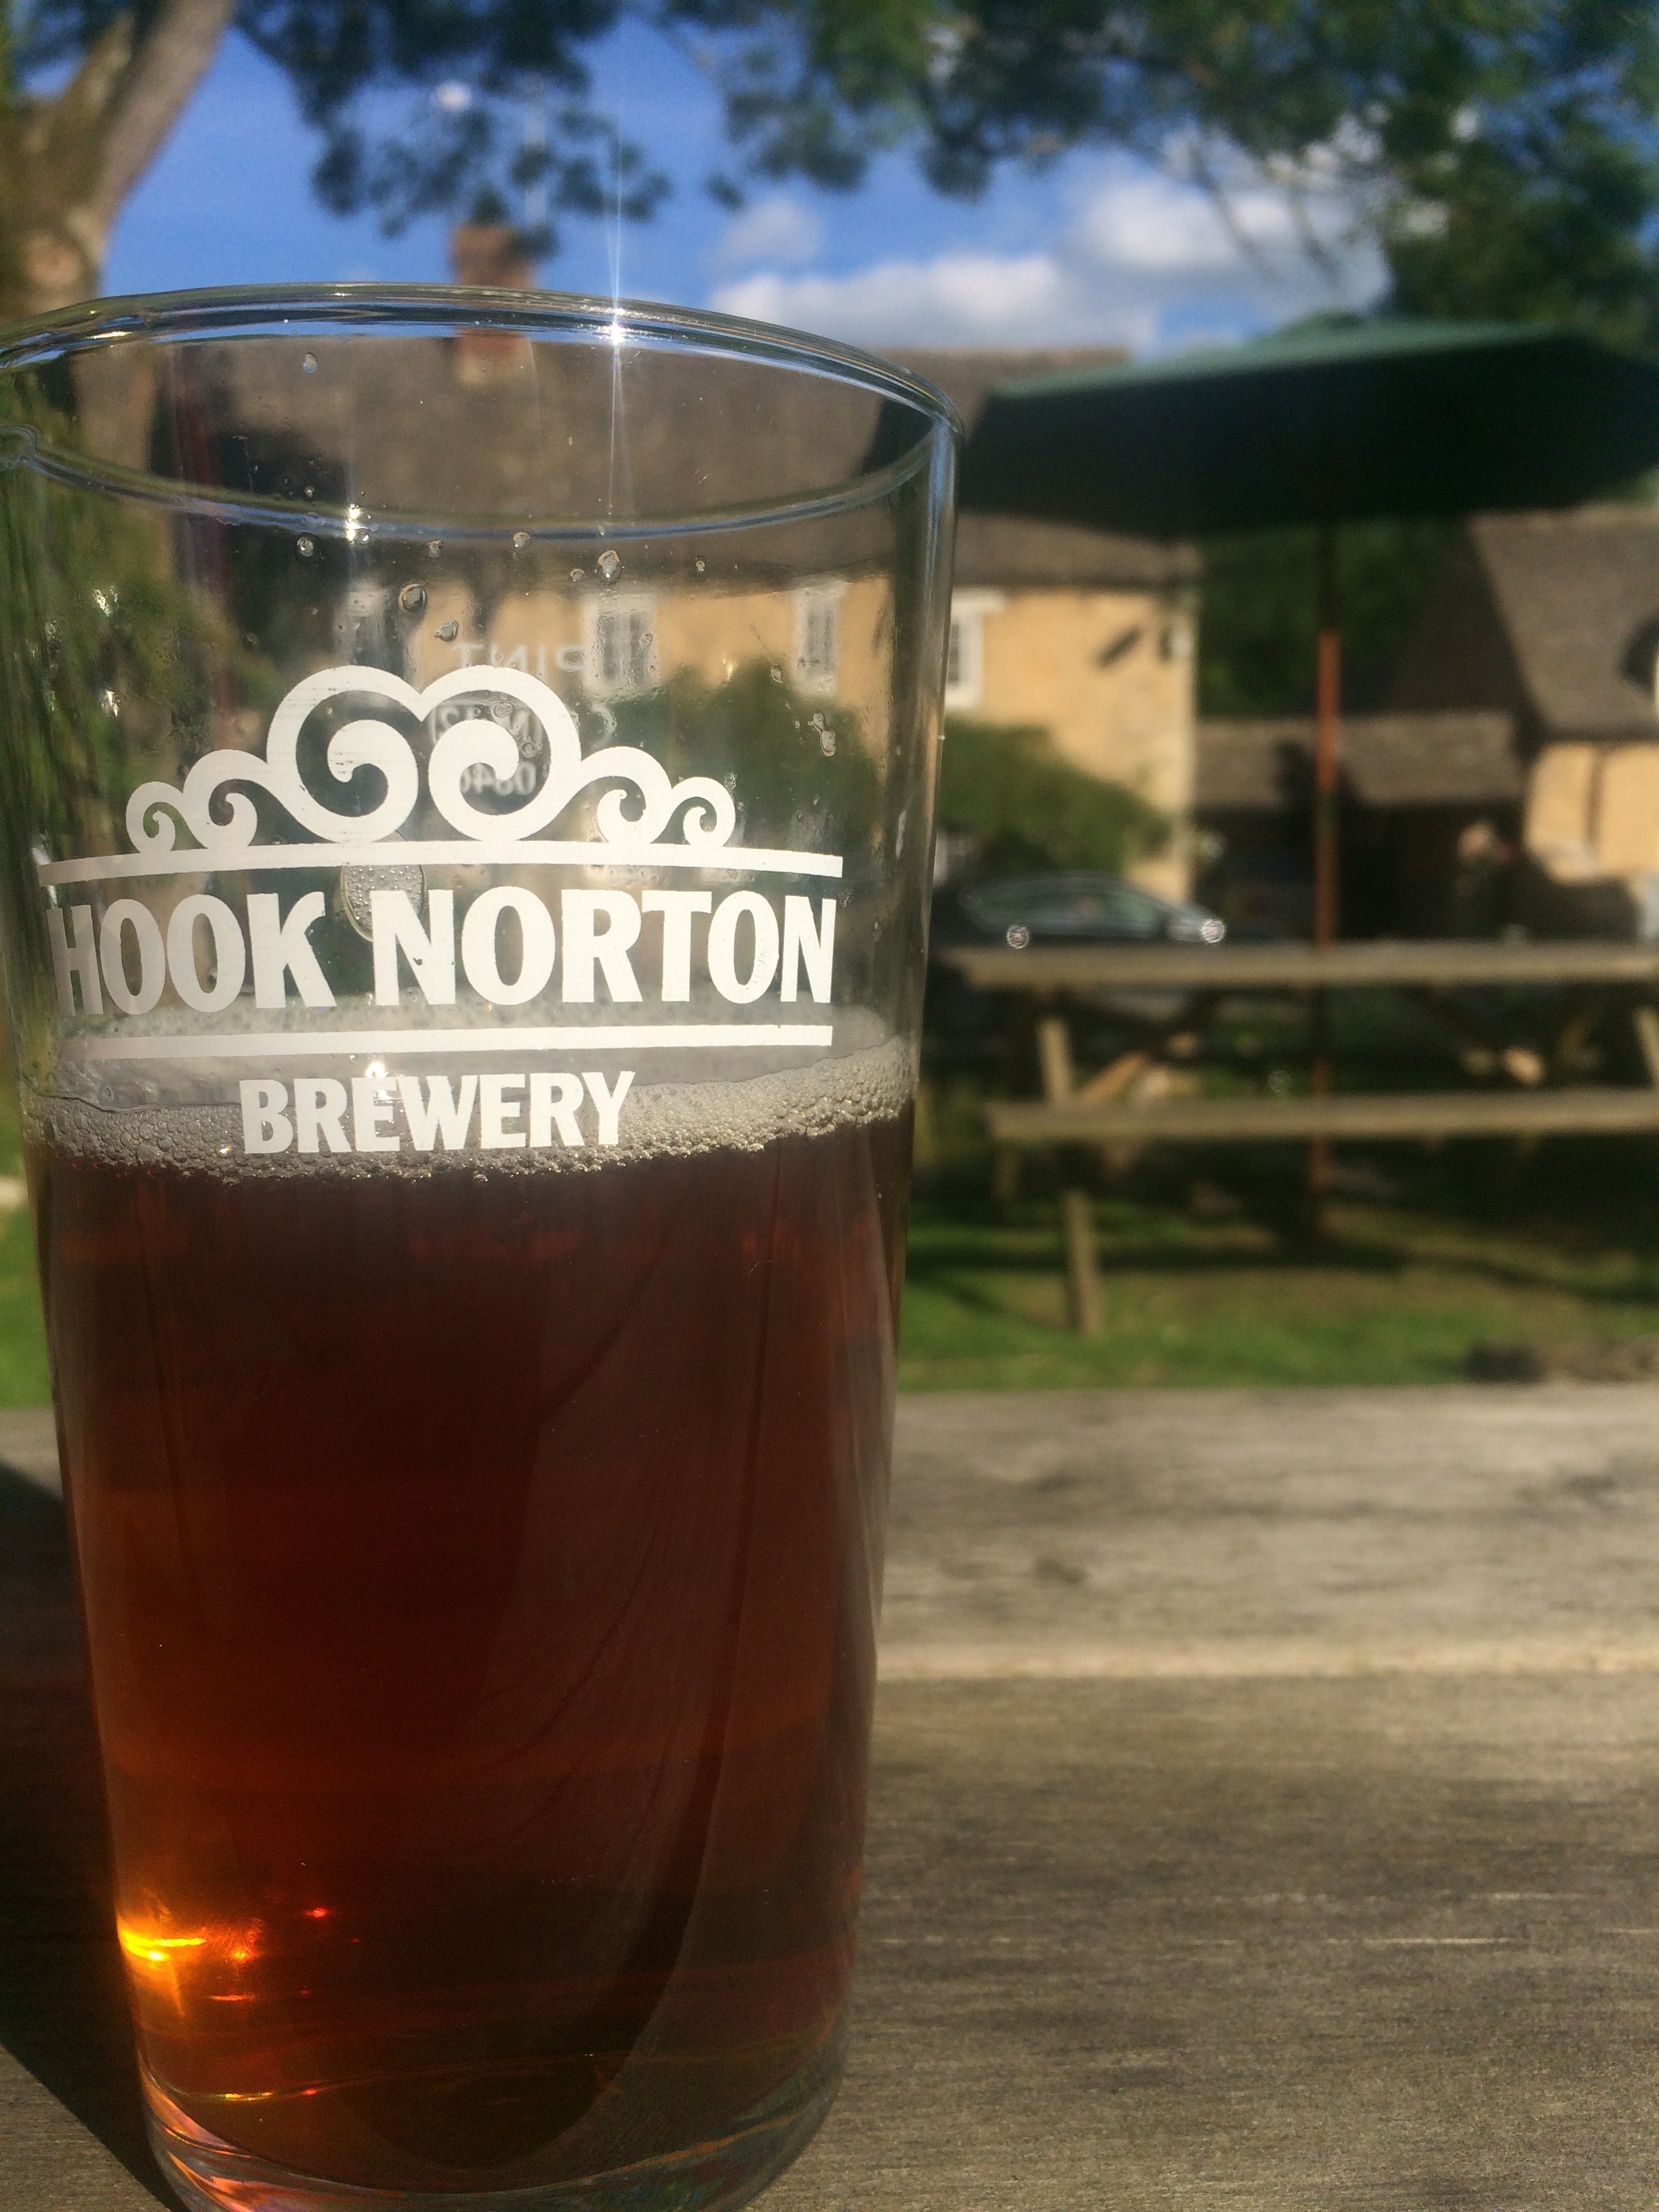 hook norton brewery glass